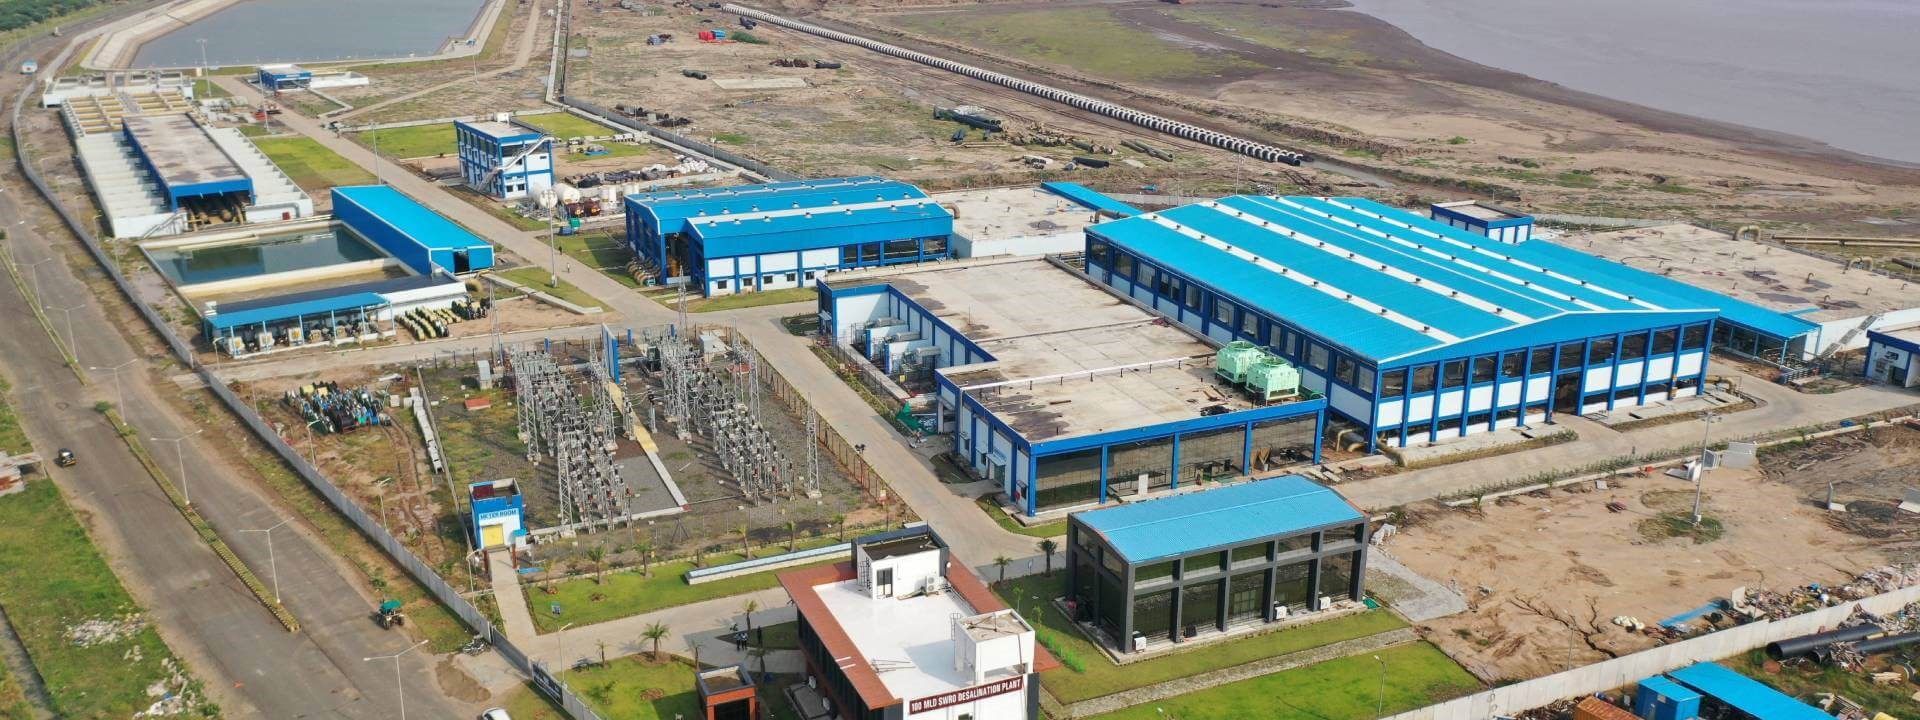 The 100 MLD SWRO (Sea Water Reverse Osmosis) Desalination Plant